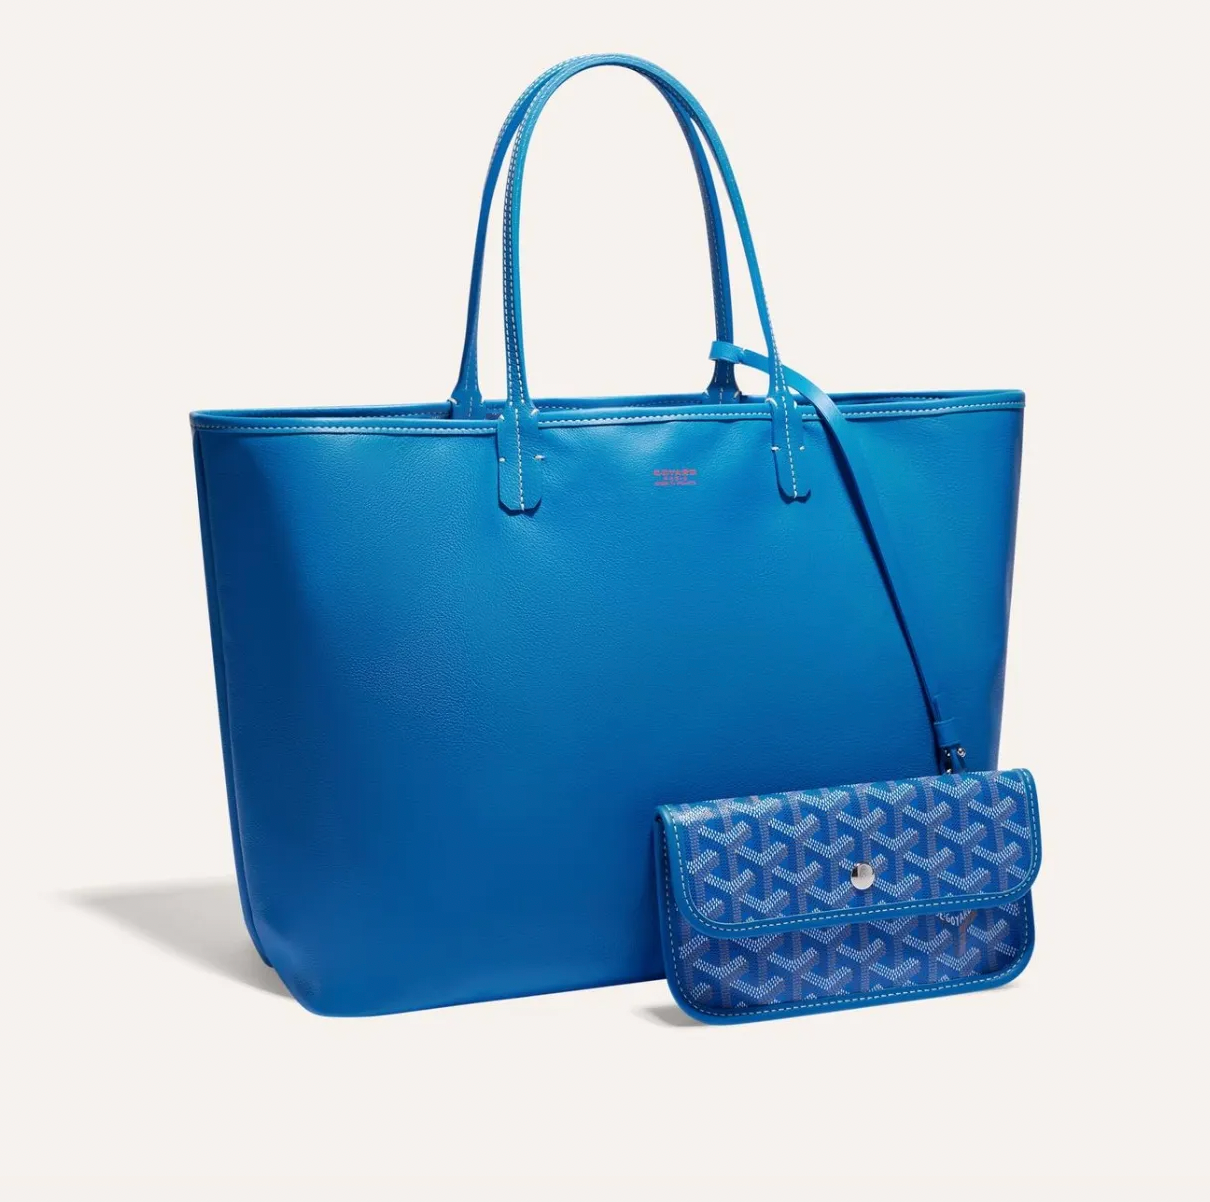 Shop GOYARD ANJOU Handbags by LifeinParis